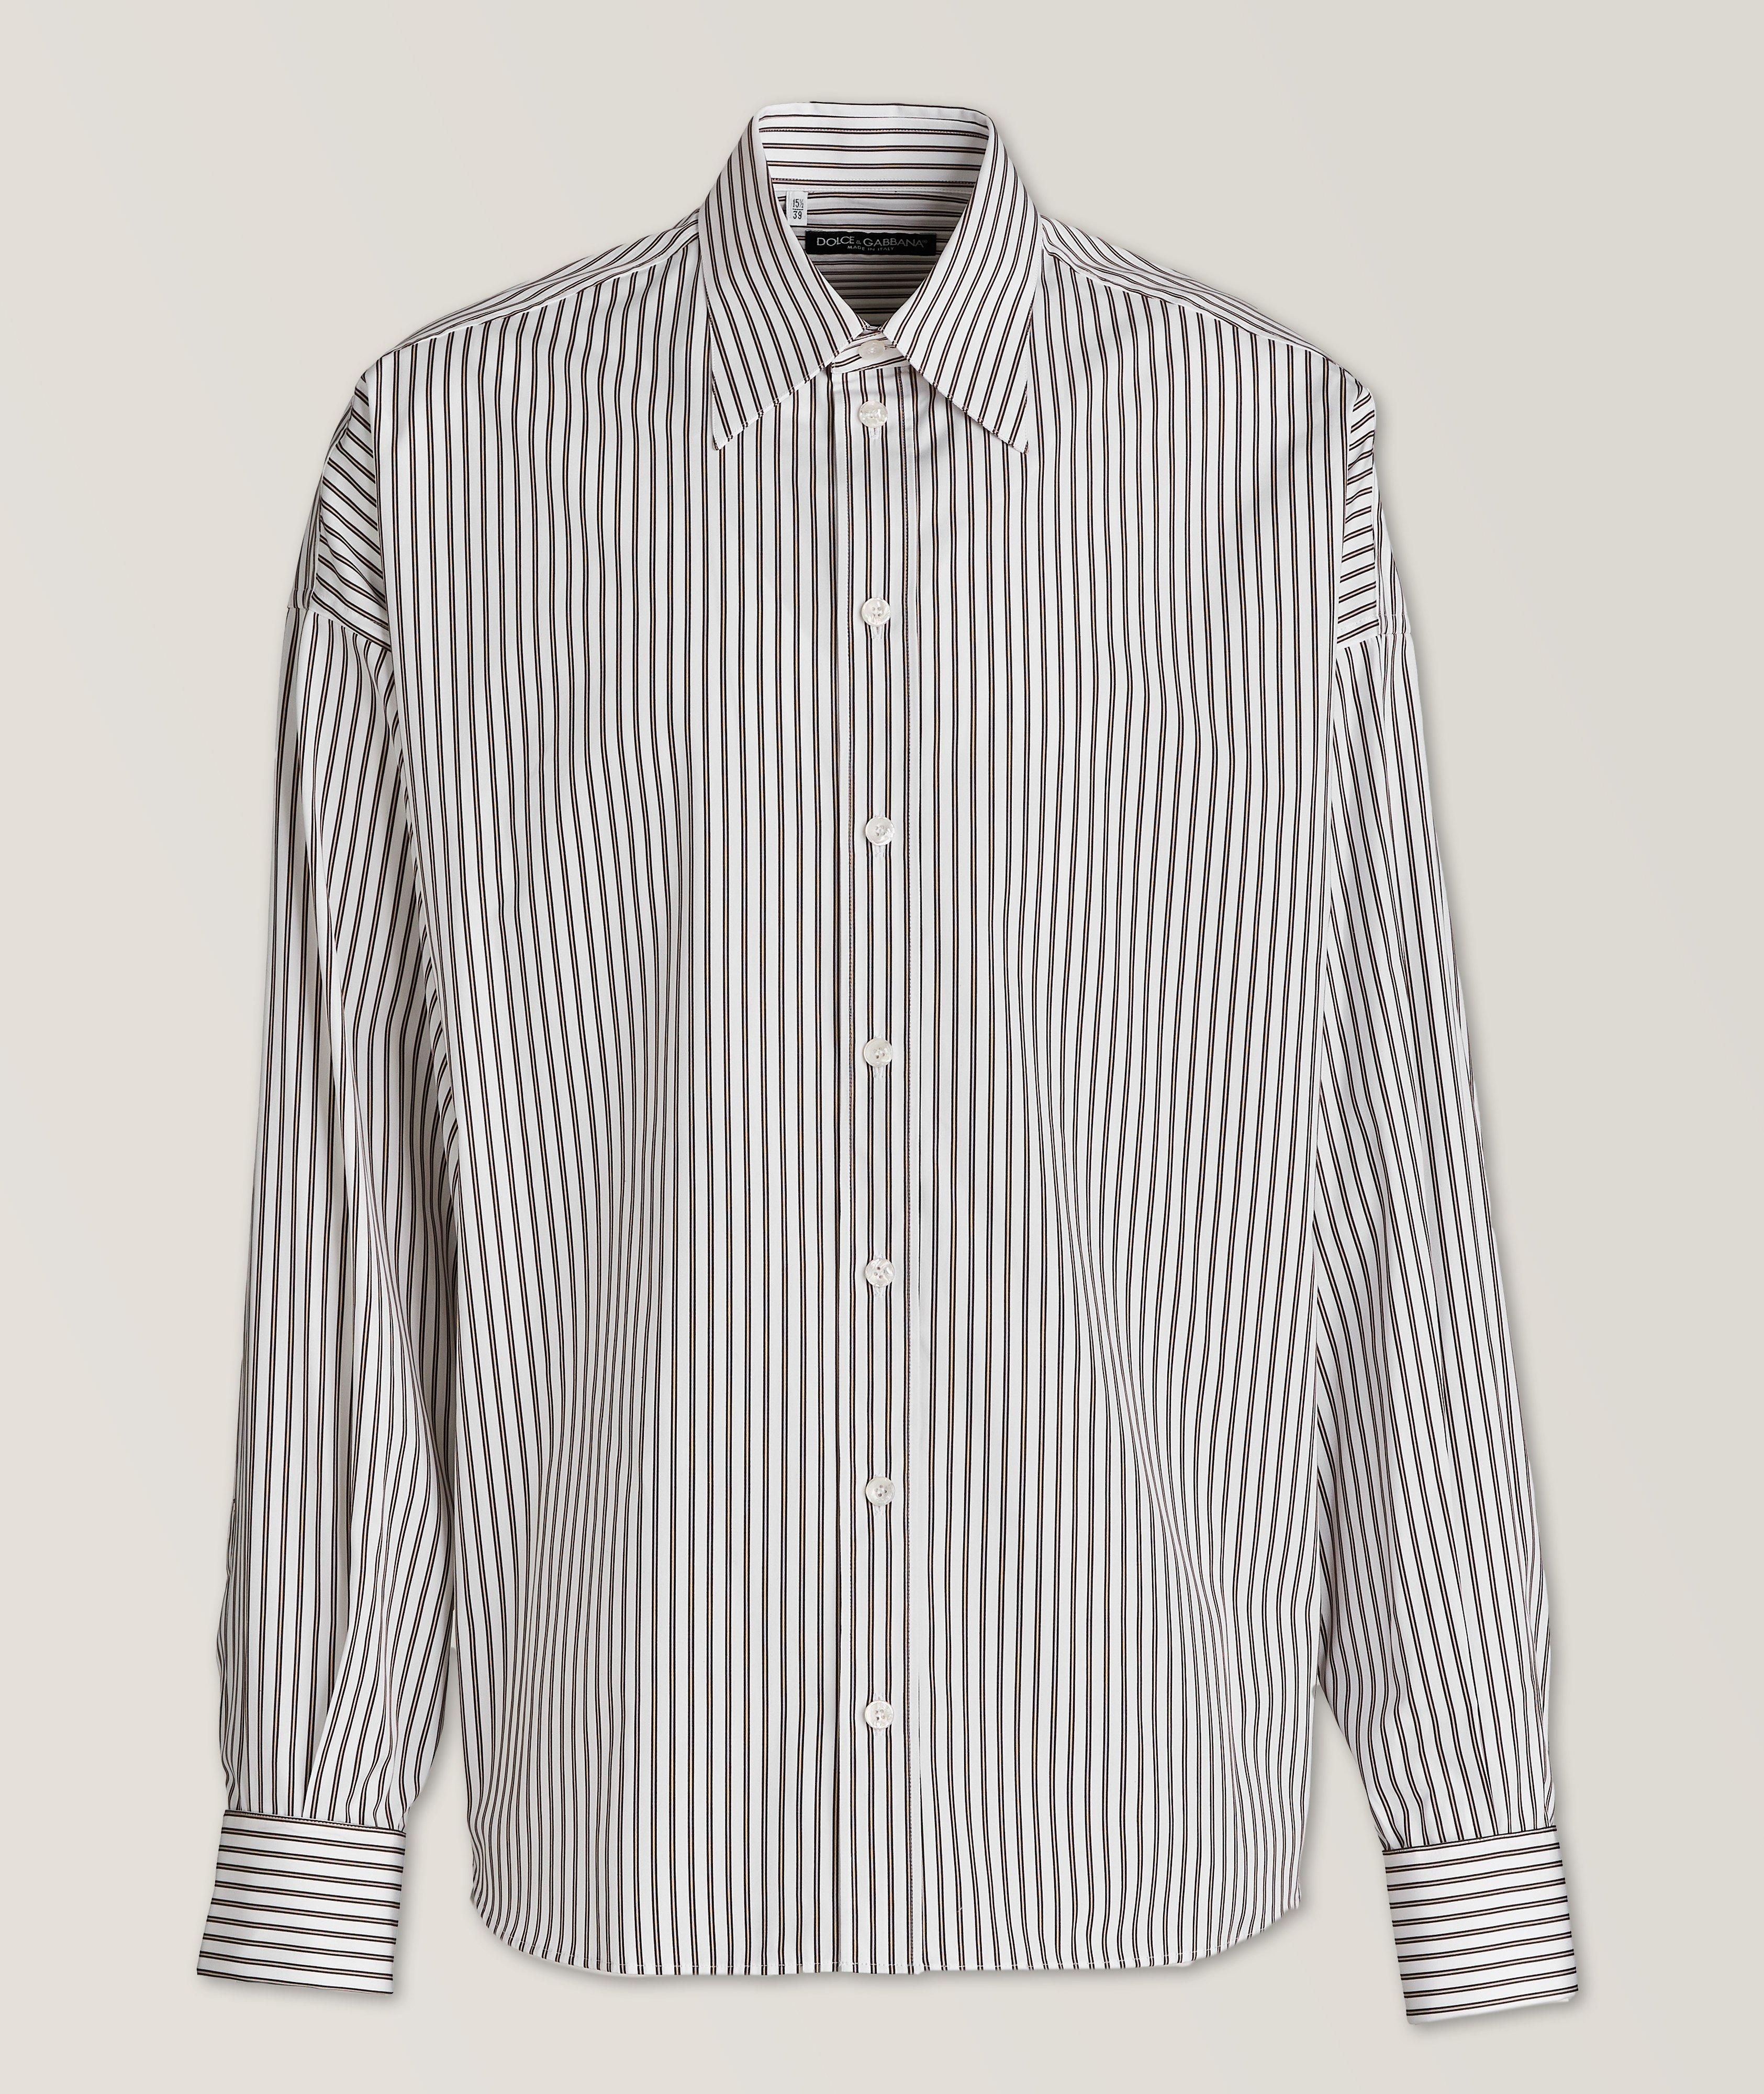 Stile Collection Striped Cotton Sport Shirt image 0